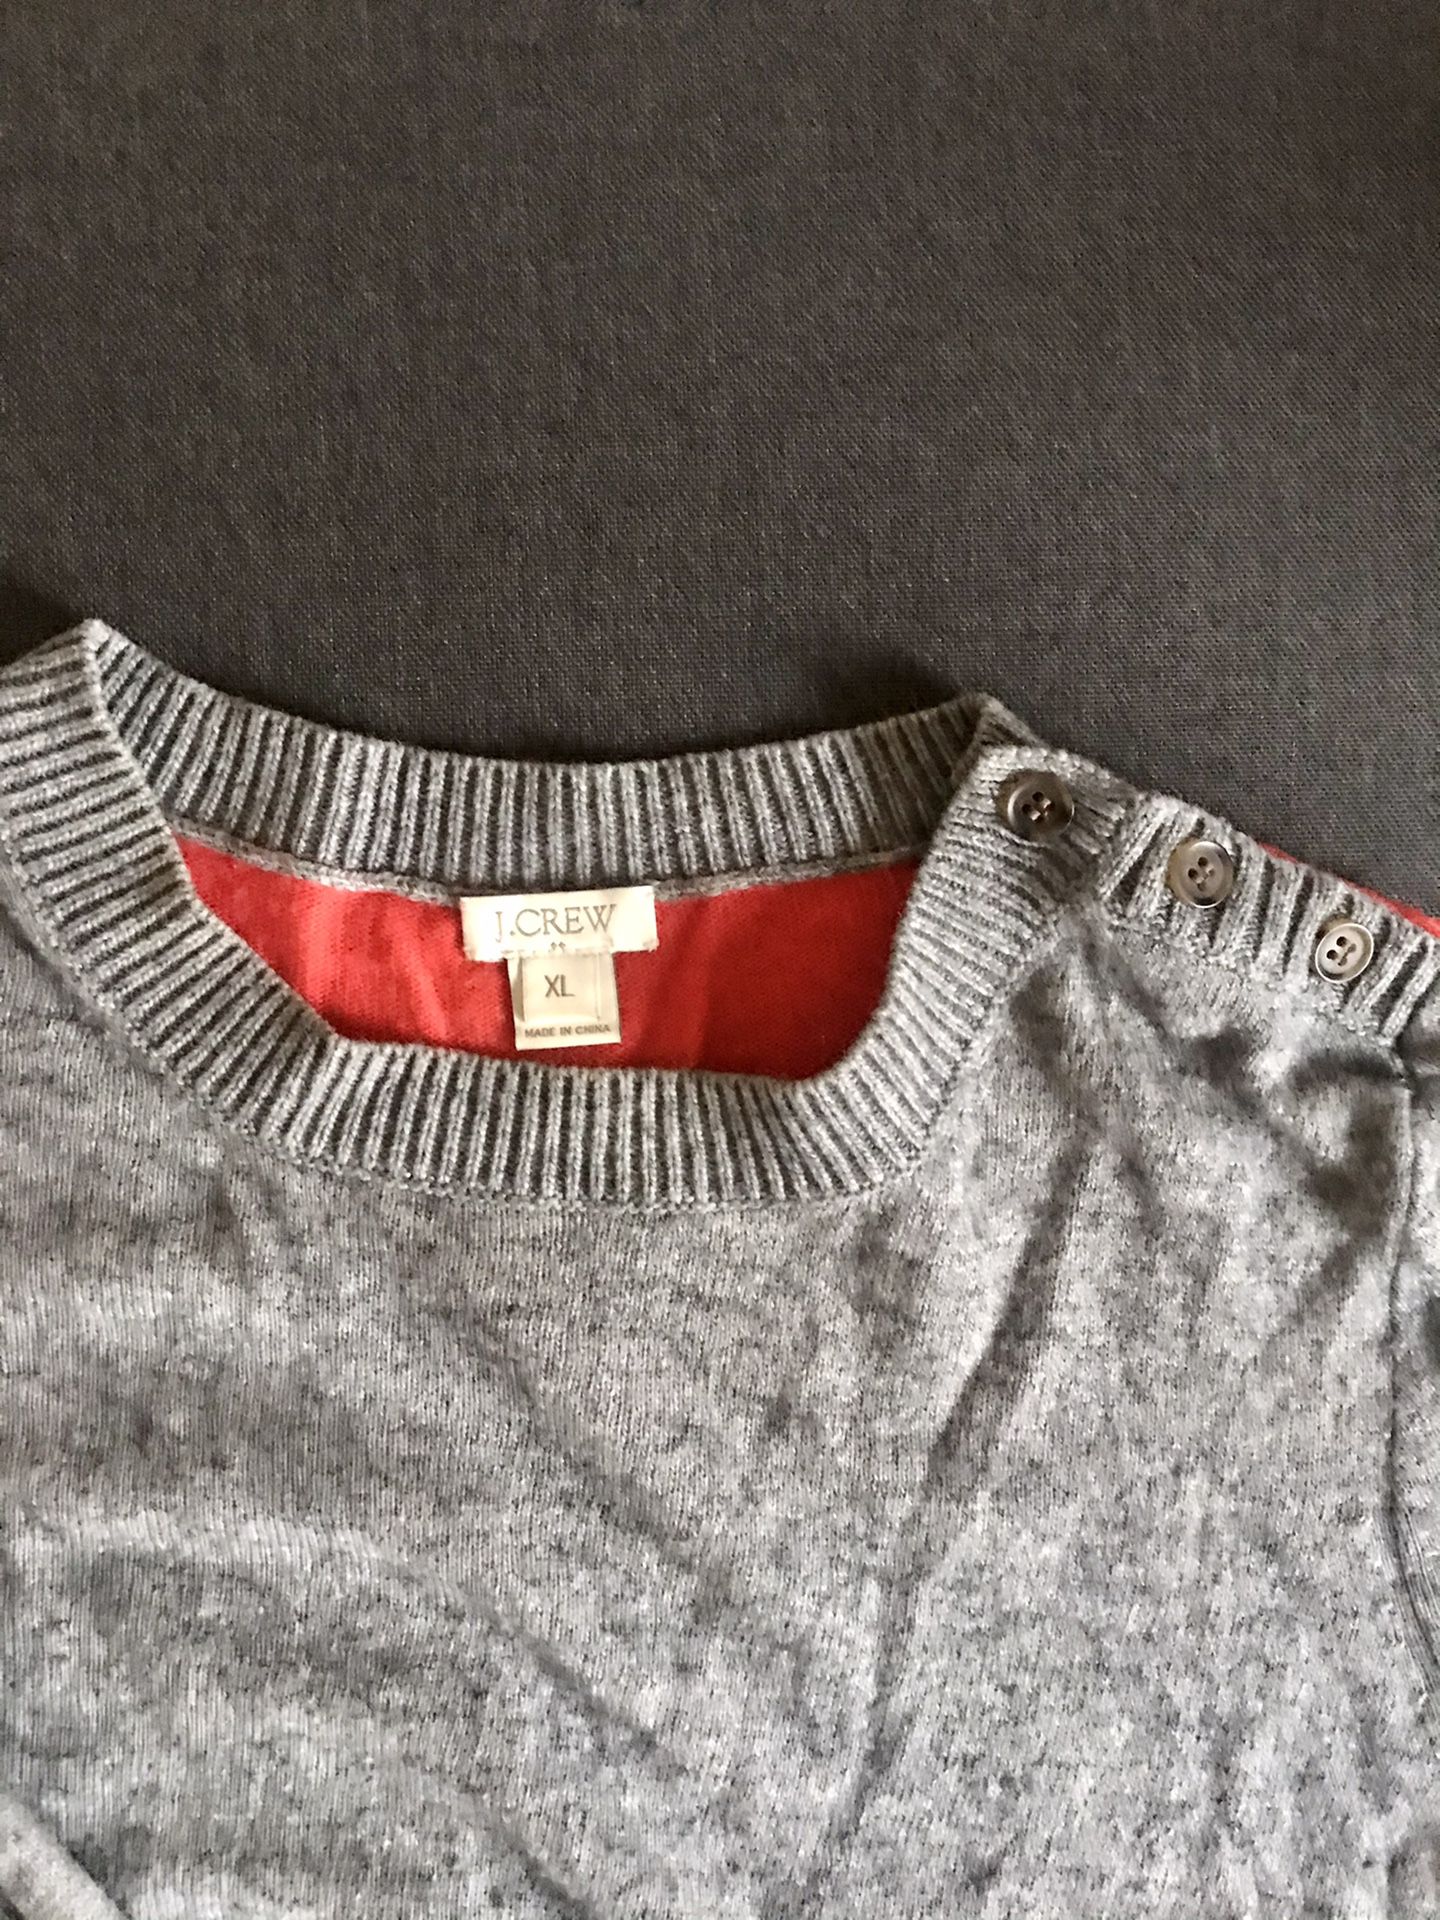 Jcrew Sweater XL